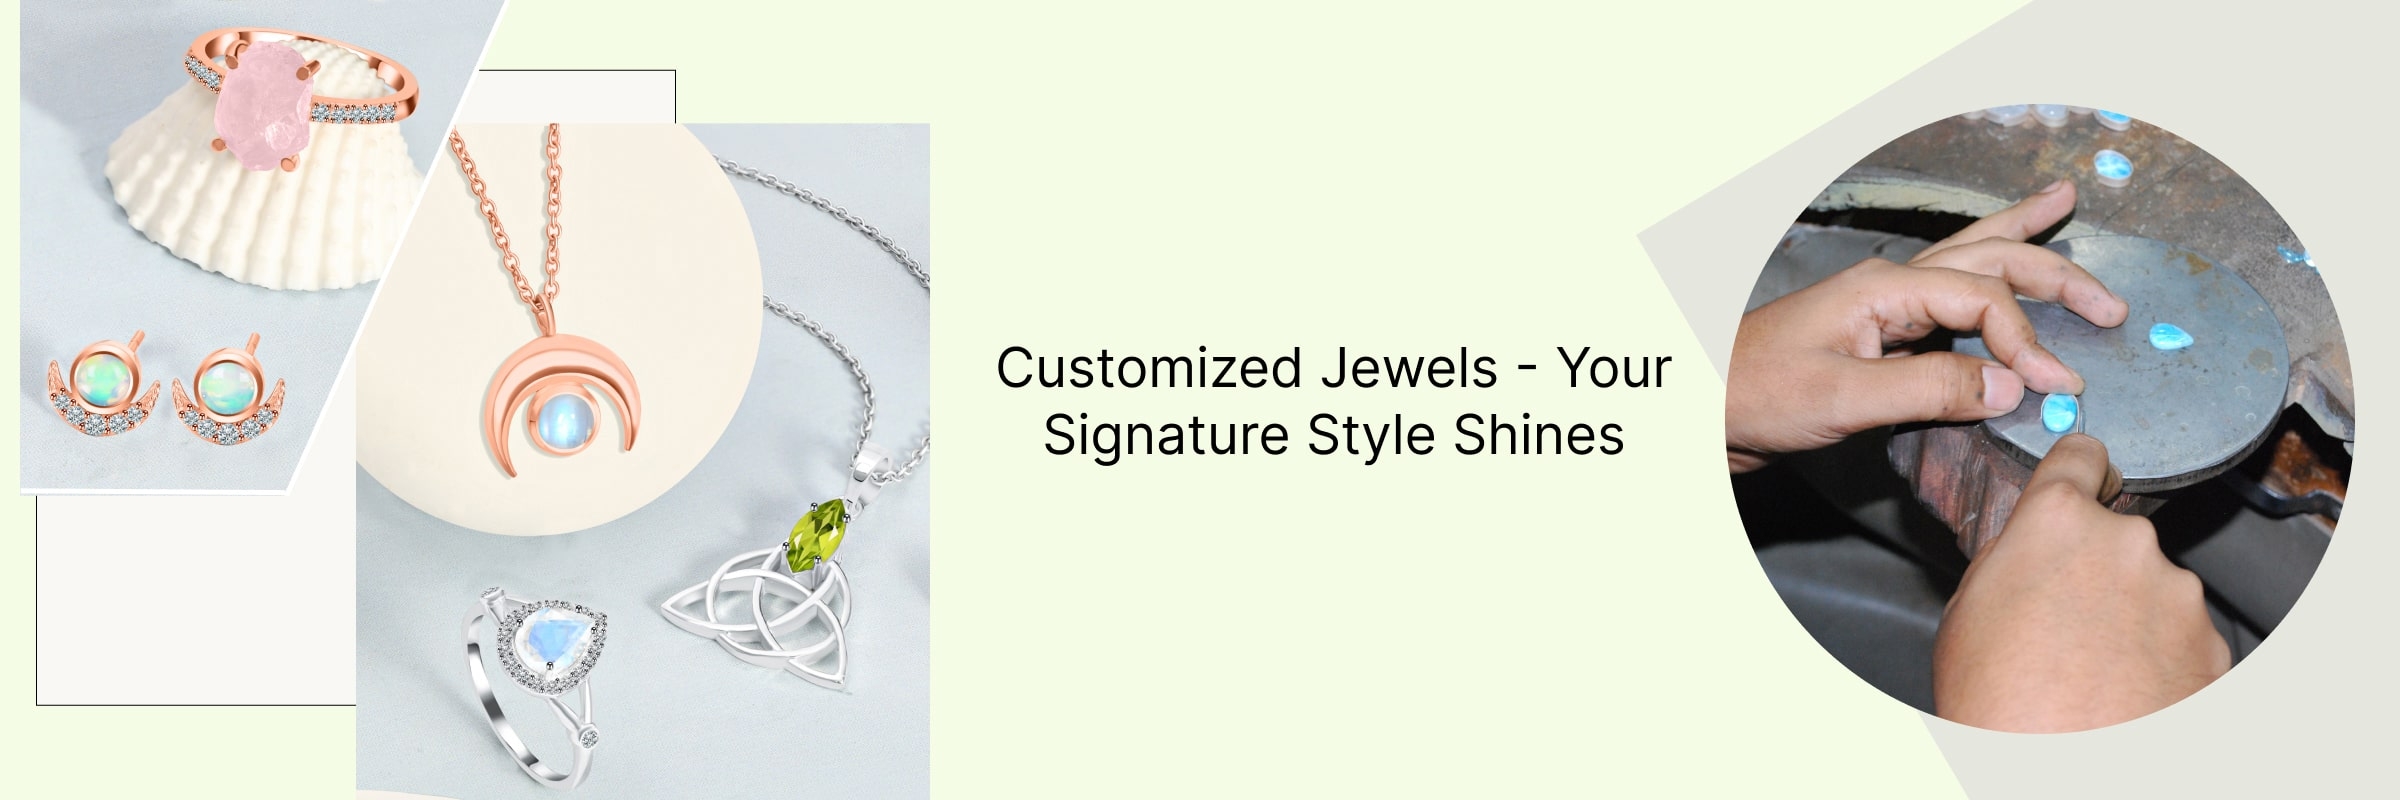 Benefits Of Customized Jewelry